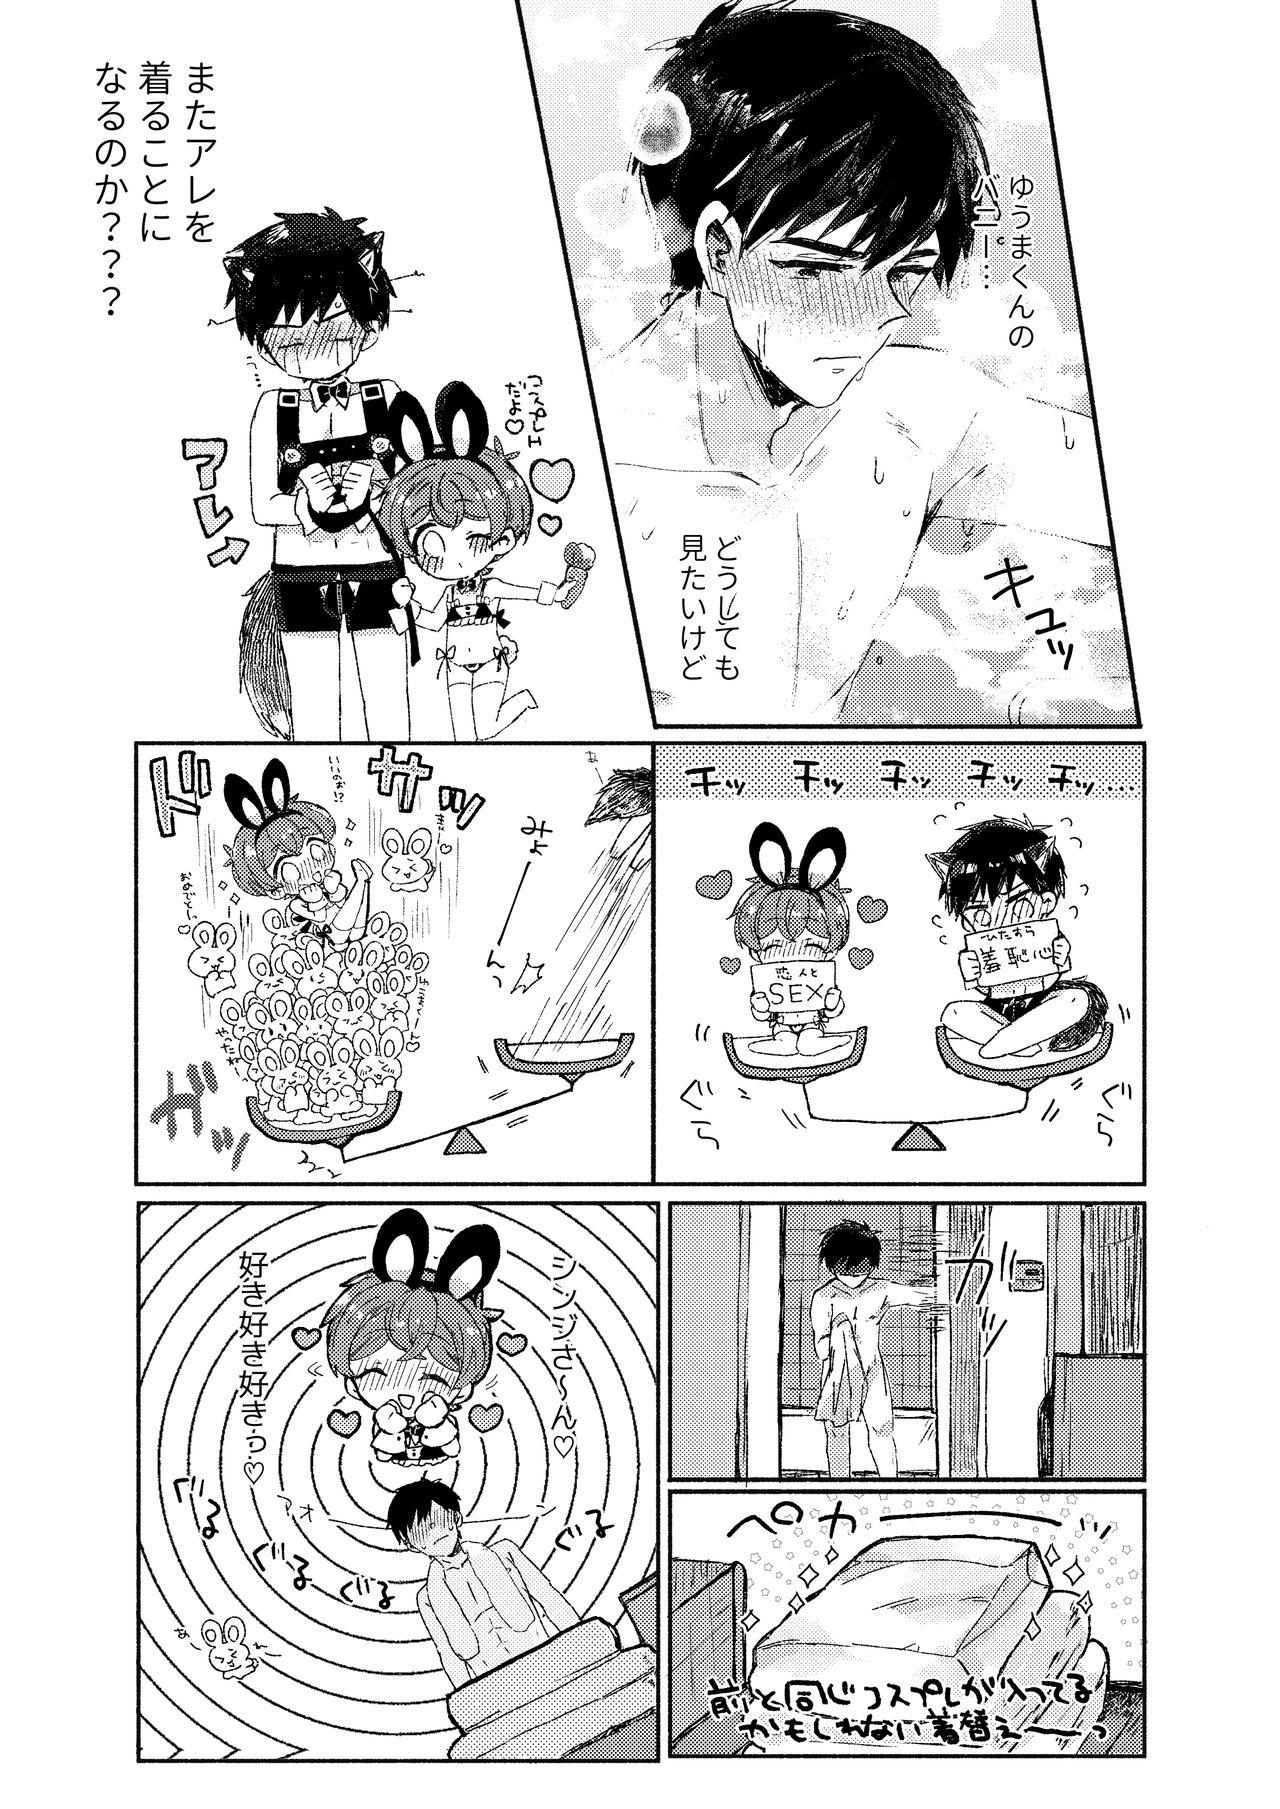 Sakasama Usagi o Hitorijime - Upside down rabbit all to yourself 18